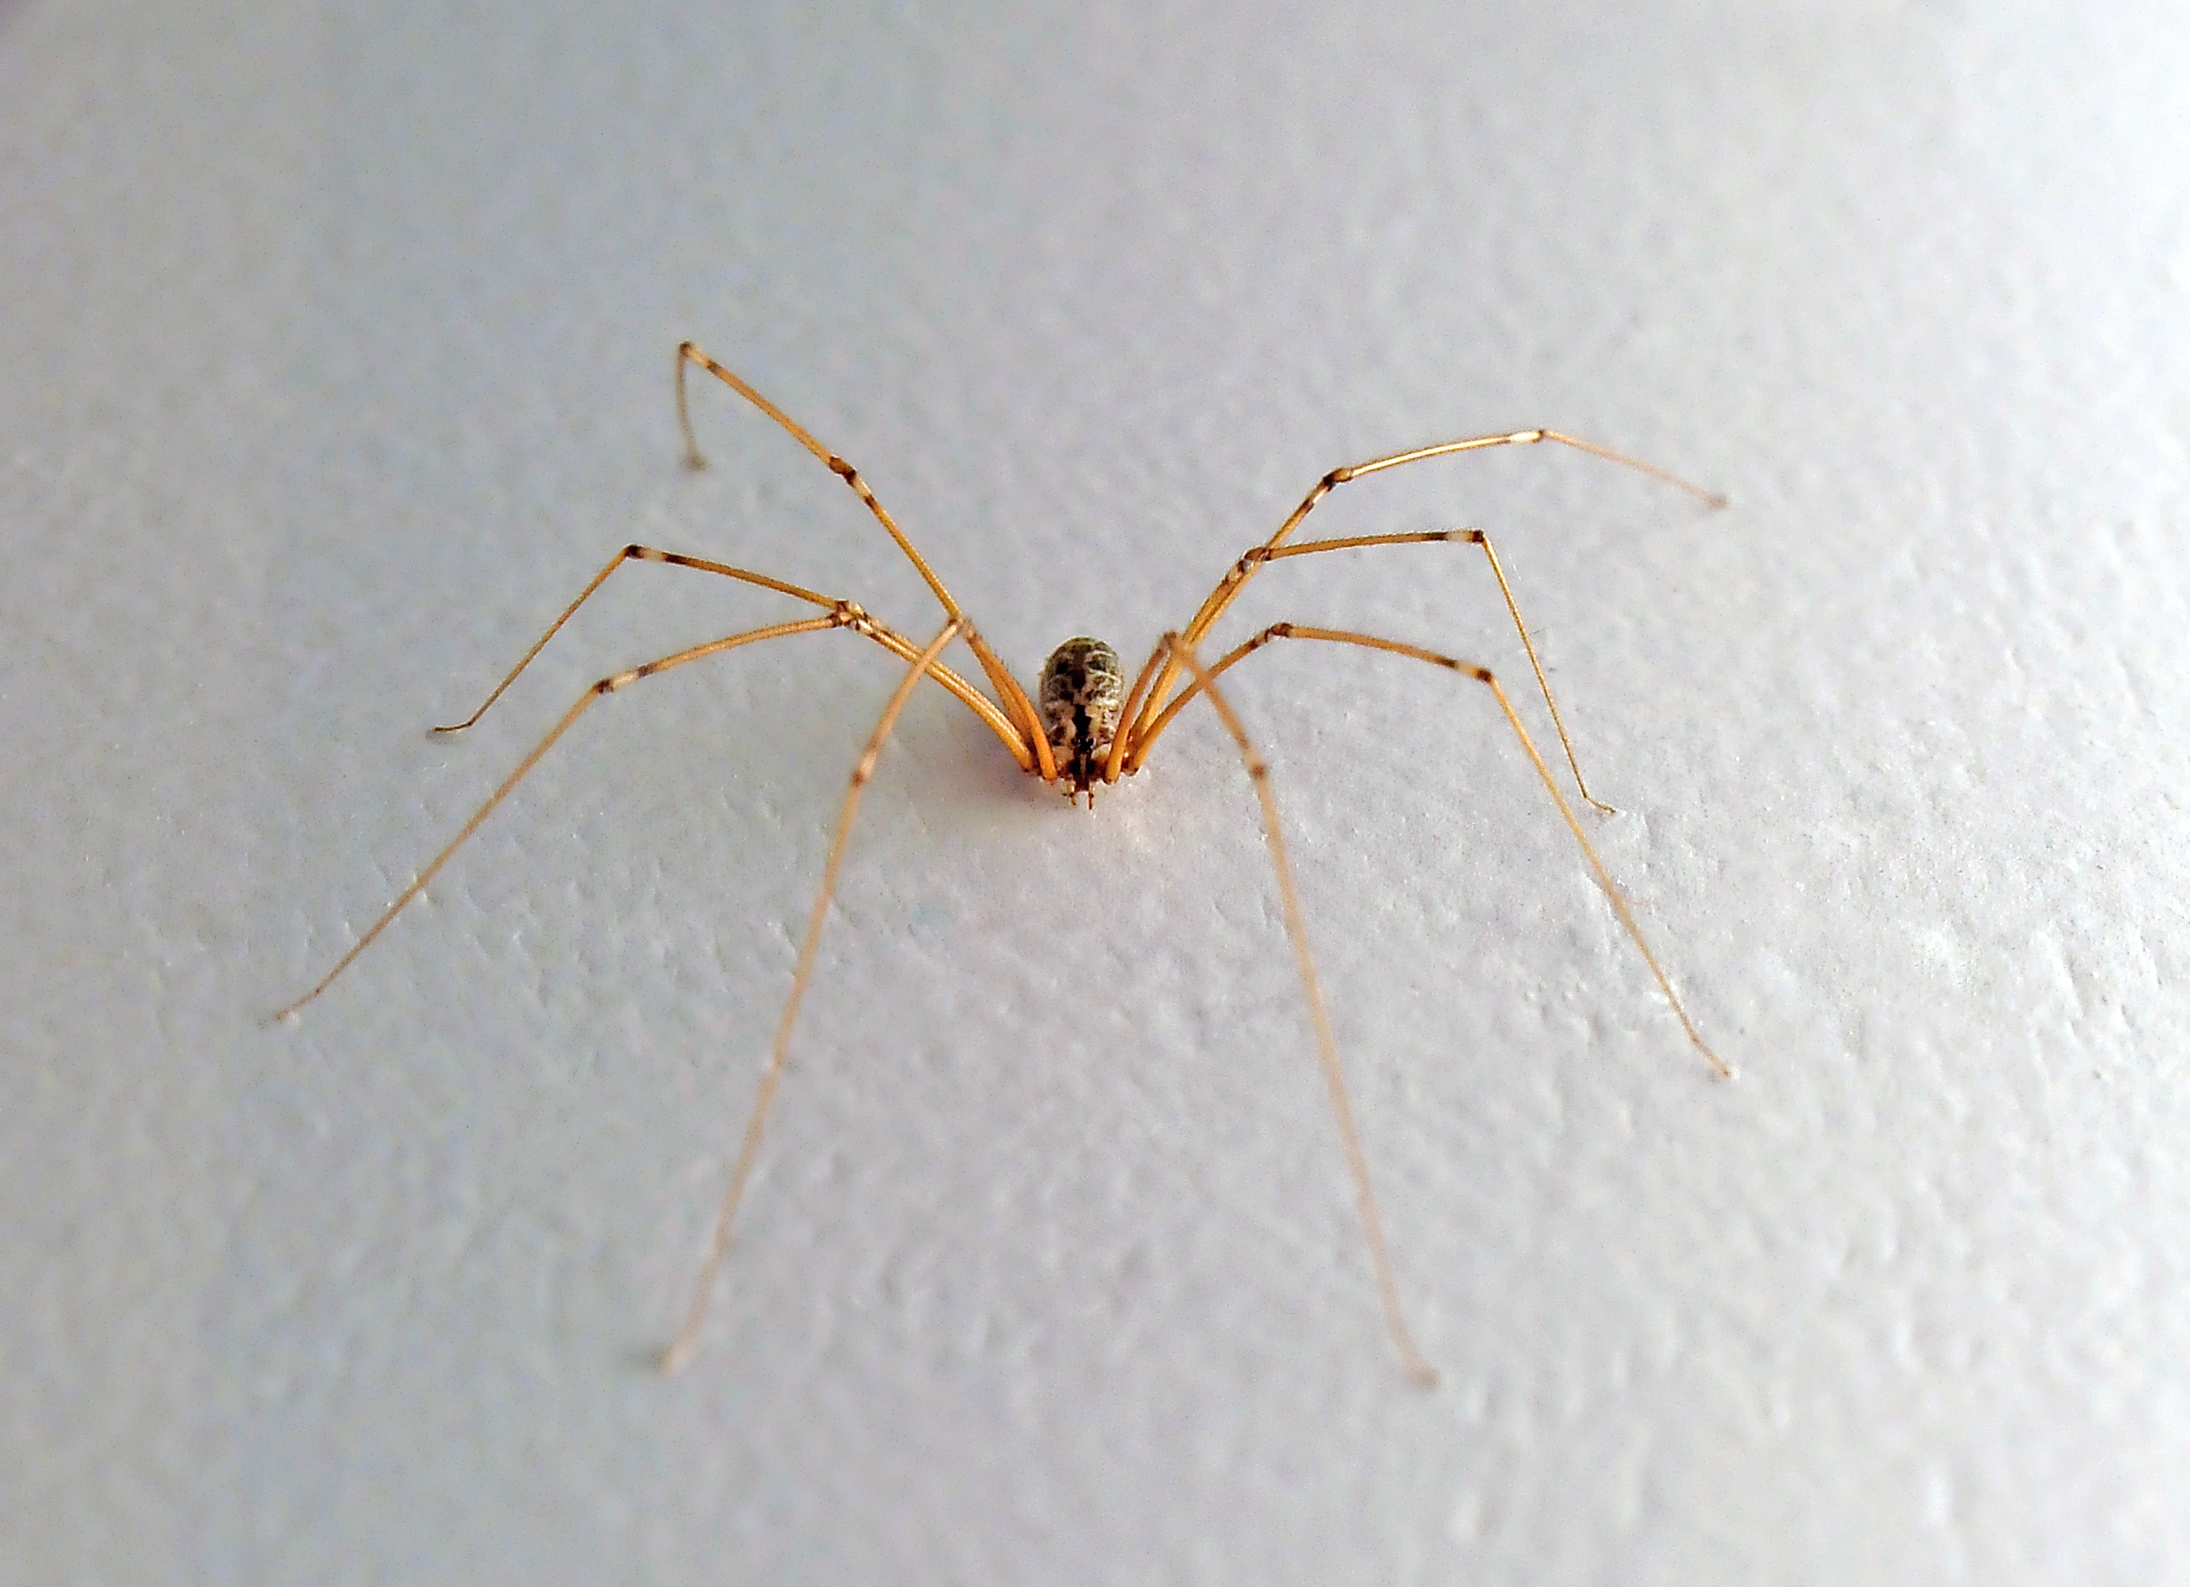 Daddy long-legs spider - Australian Geographic